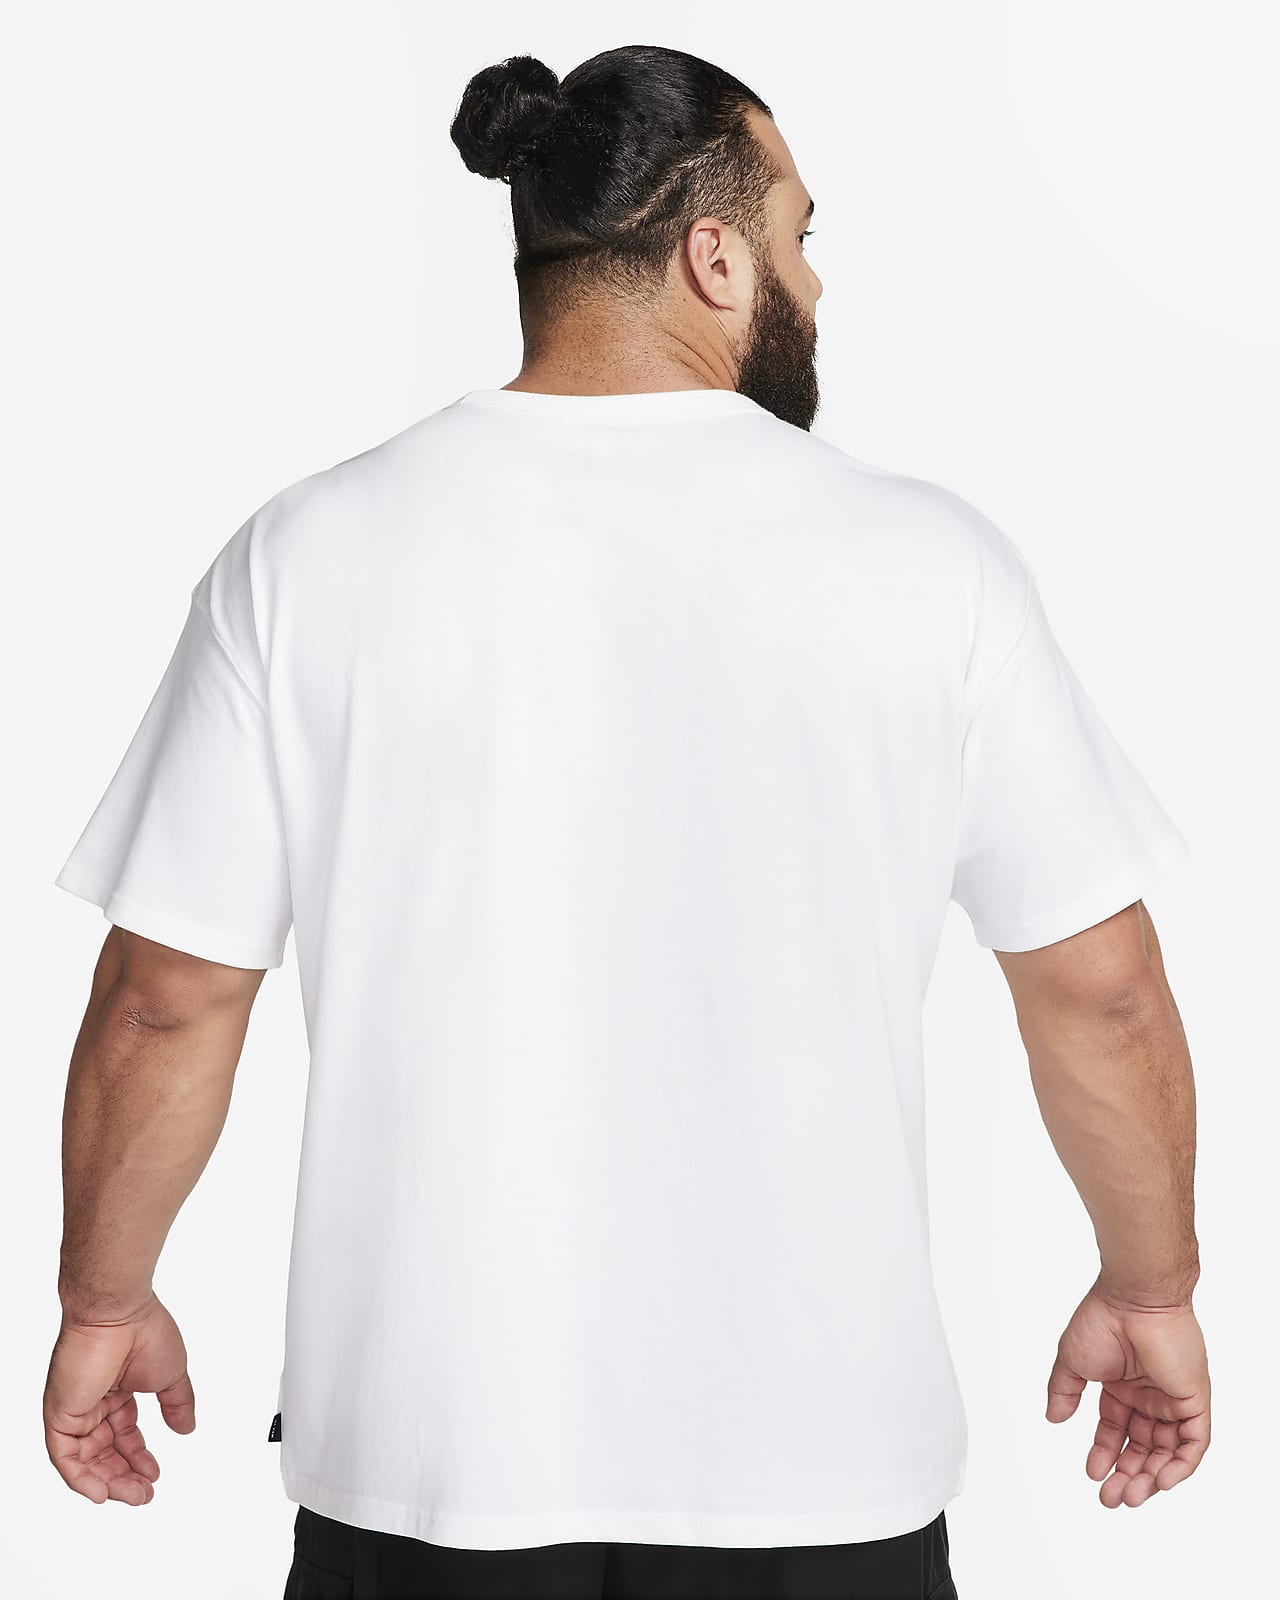 Nike Sportswear Premium Essentials Men\'s T-Shirt. Pocket